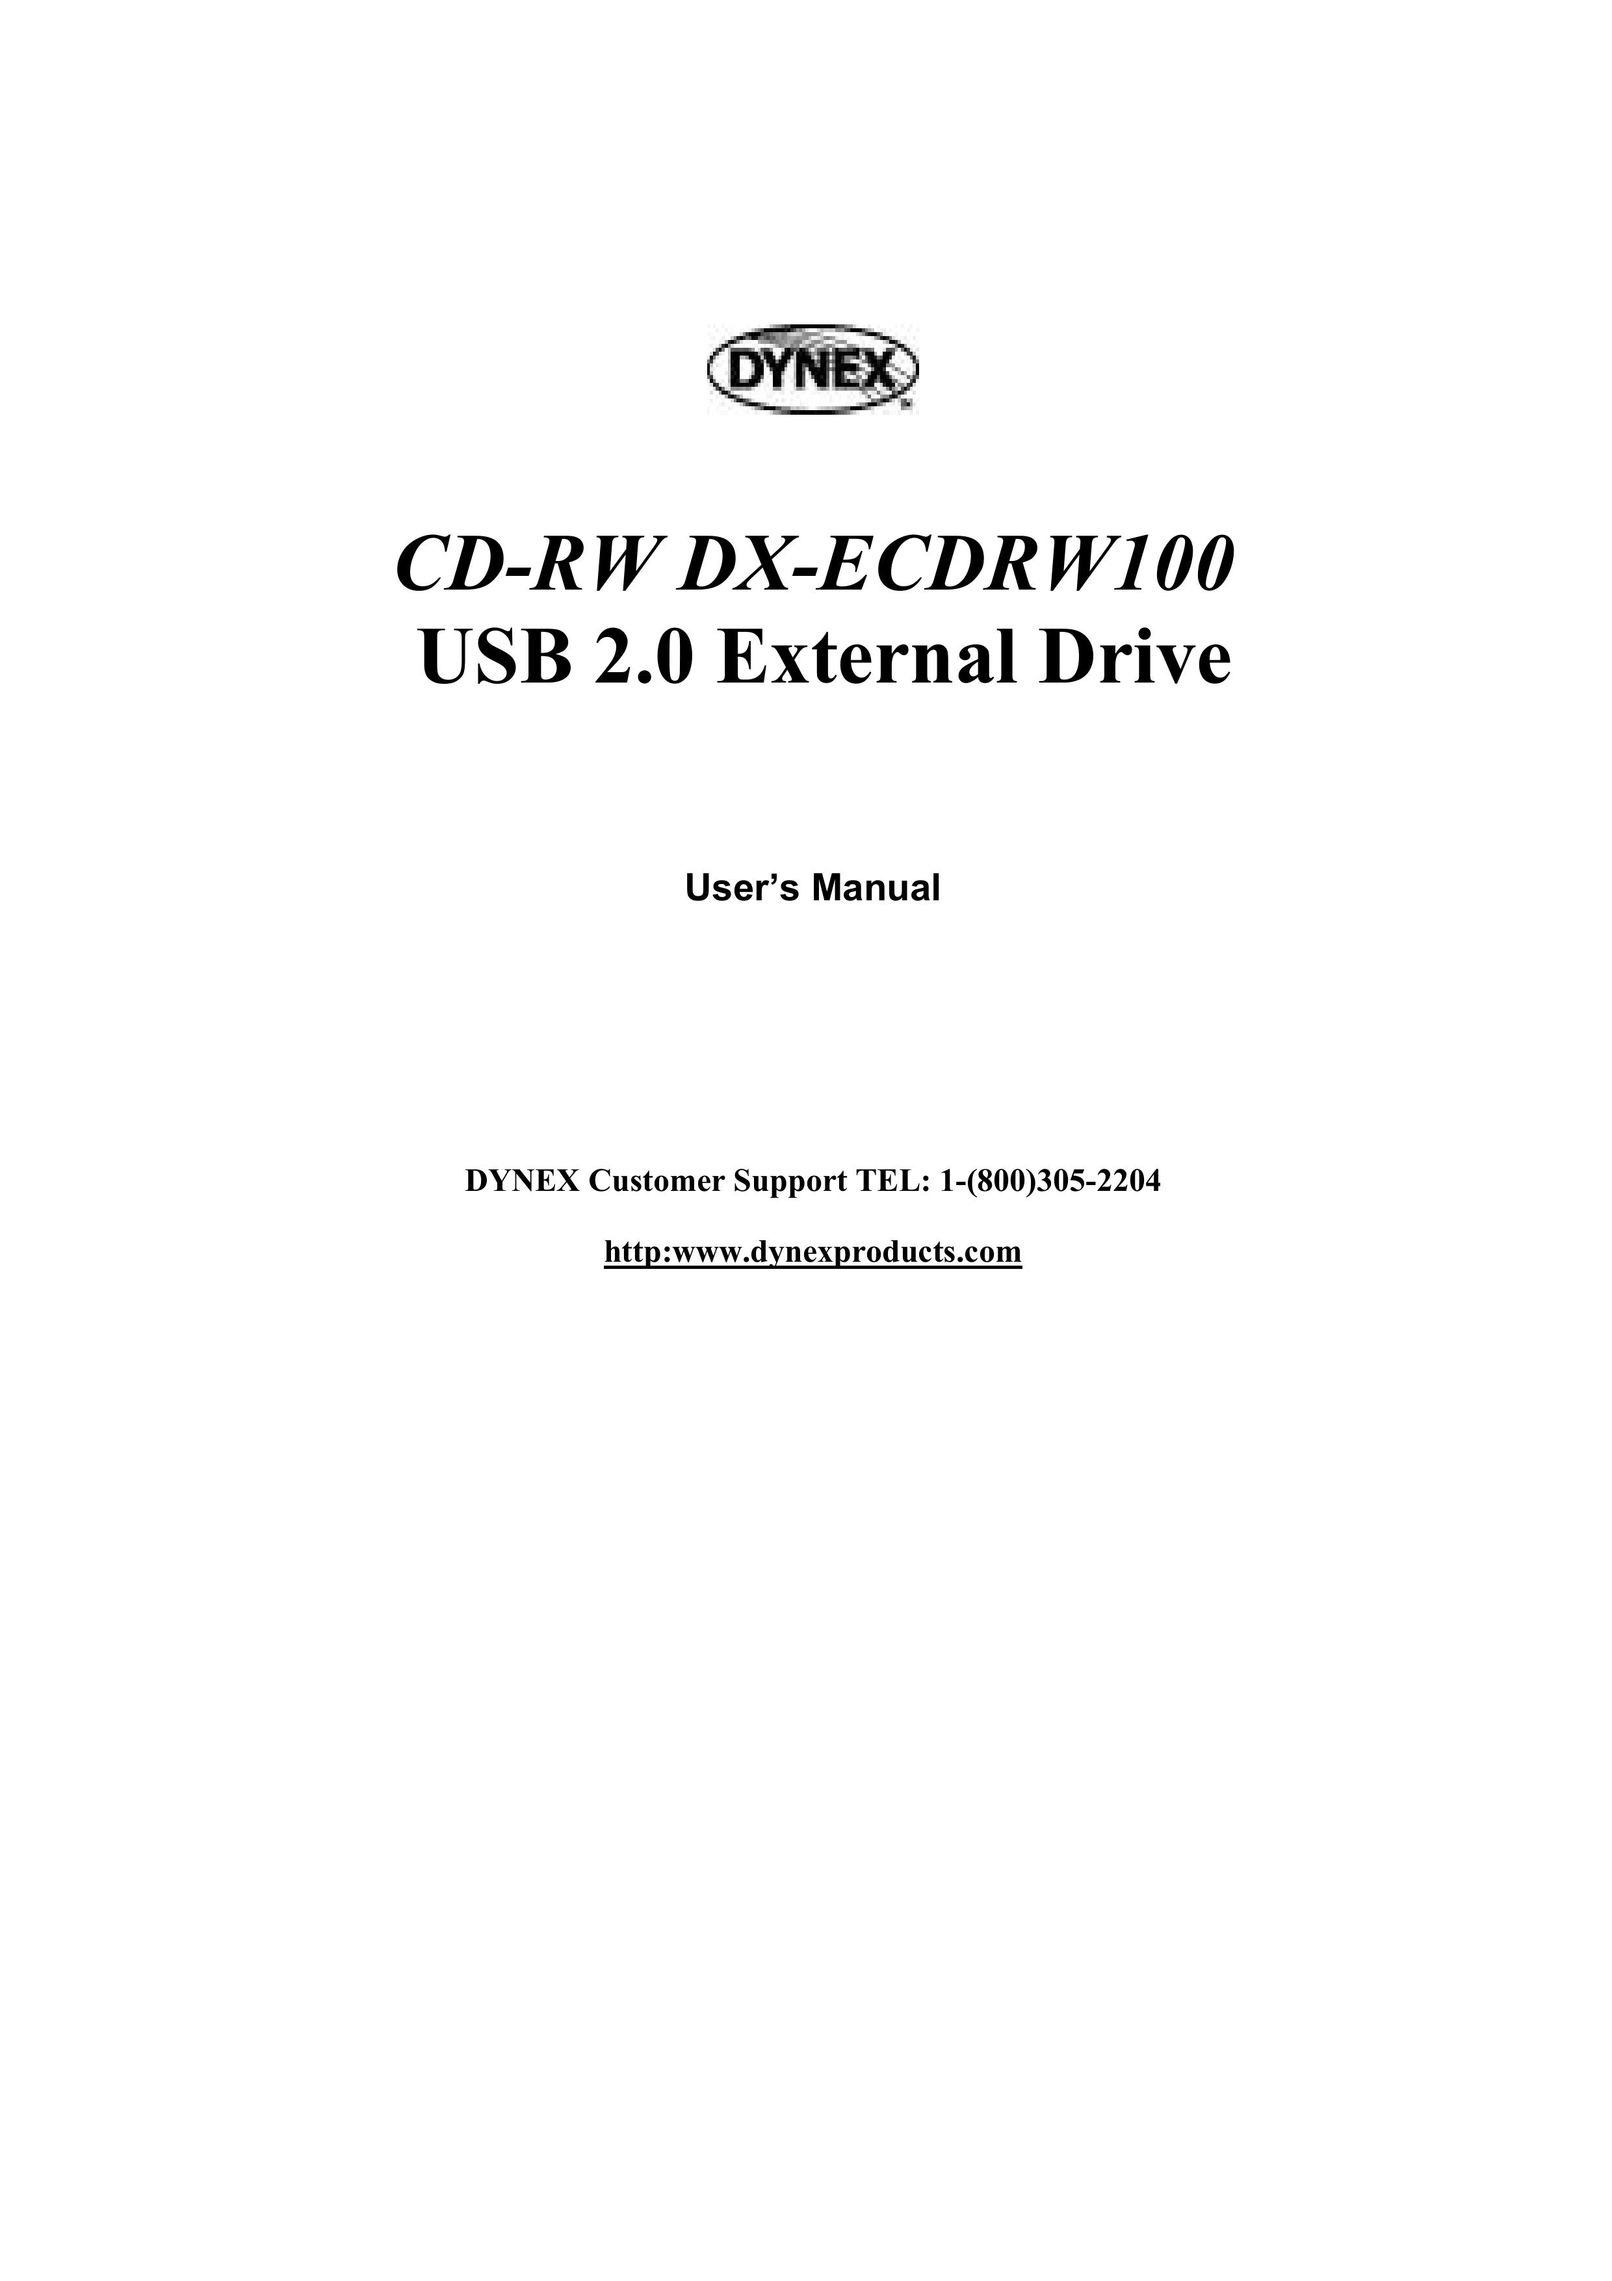 Dynex DX-ECDRW100 Computer Drive User Manual